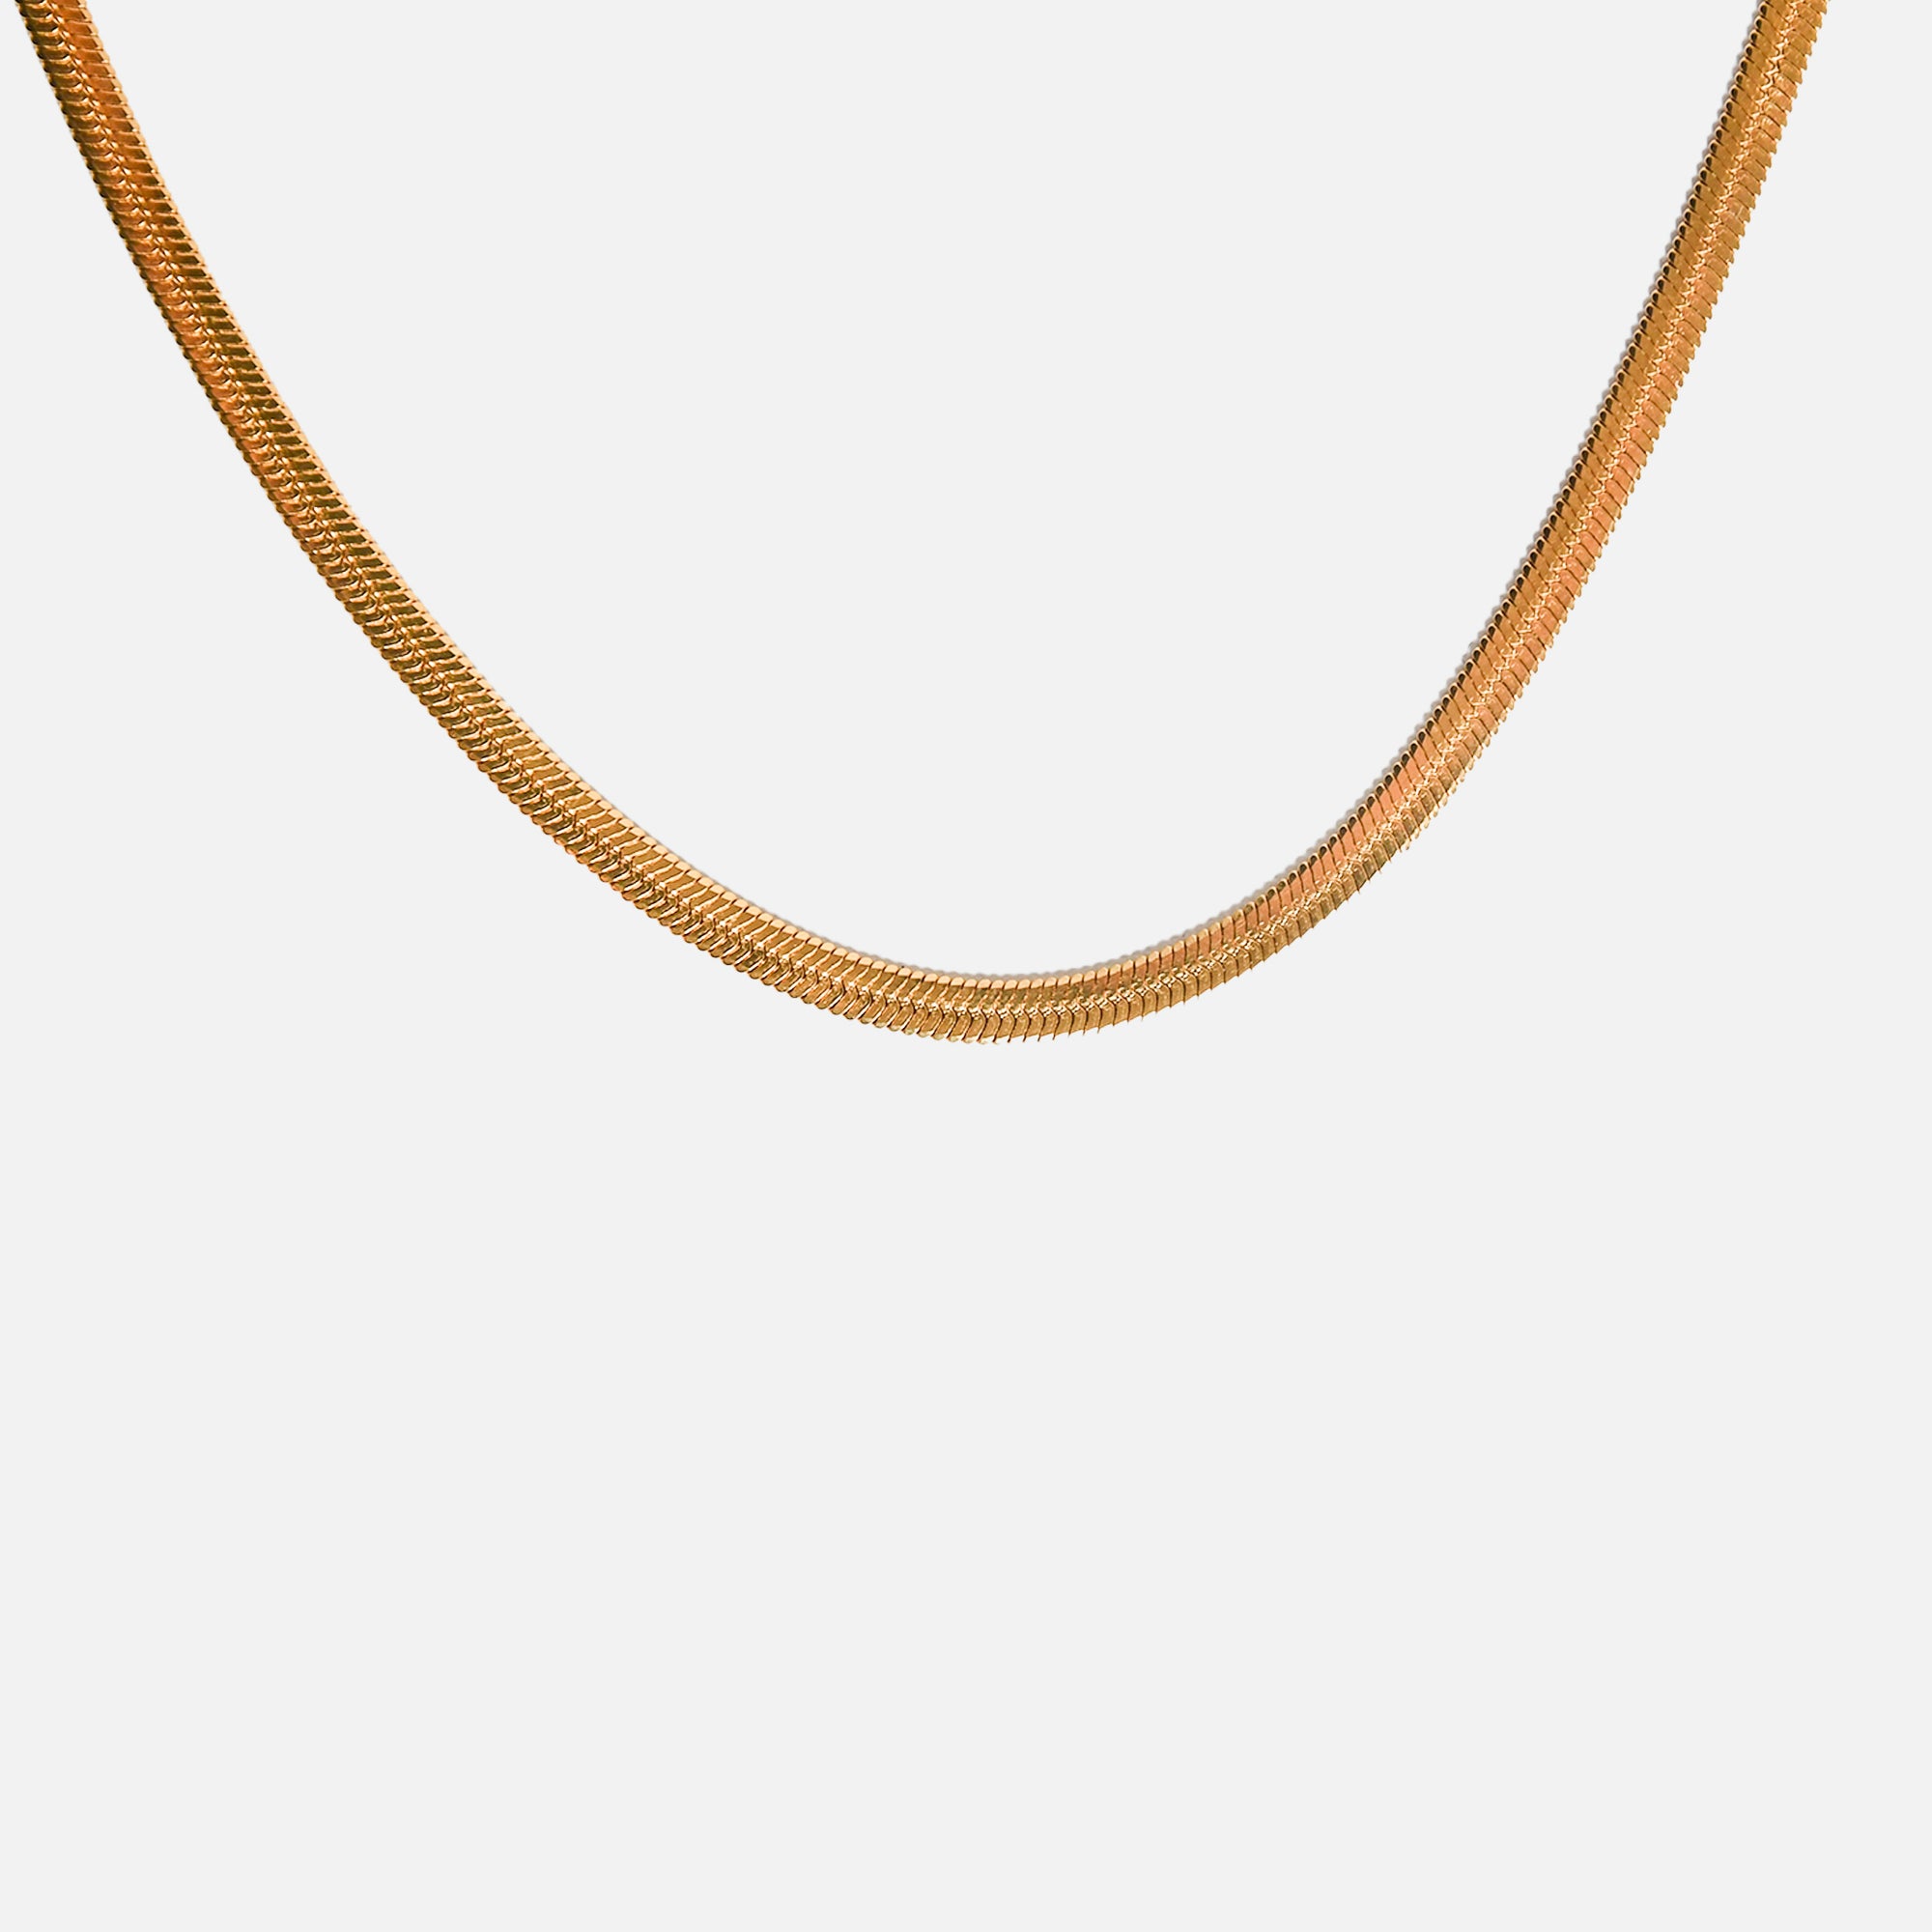 Golden serprent chain in stainless steel